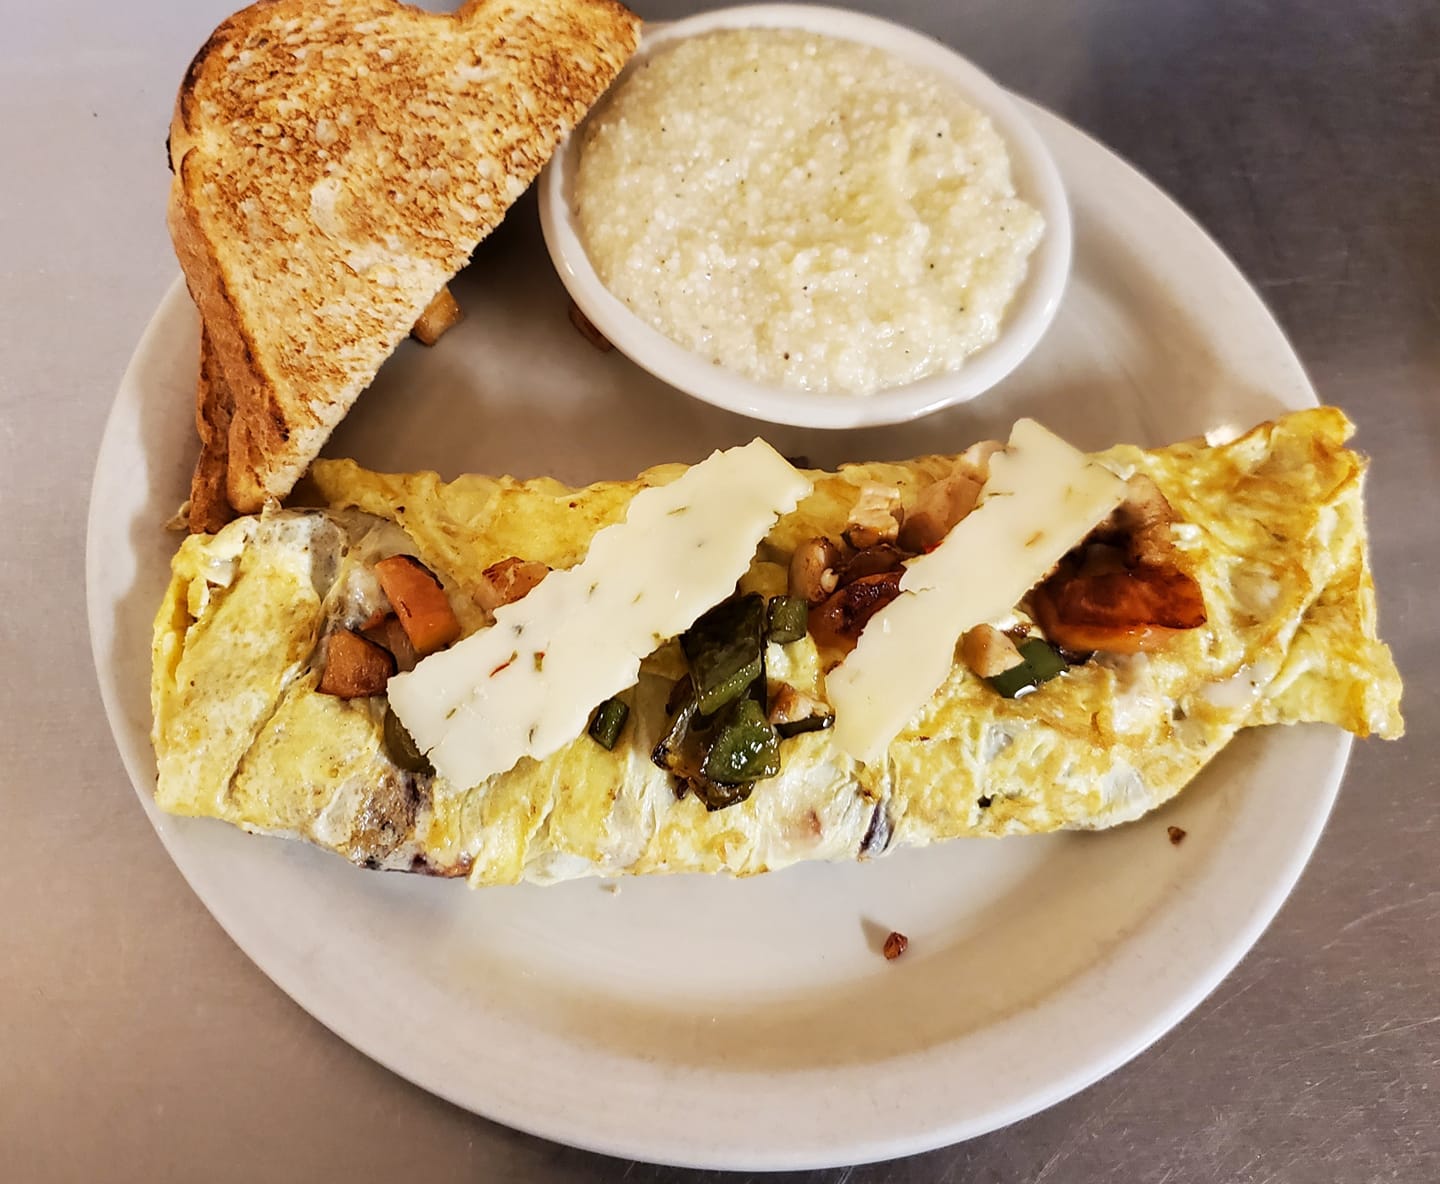 Sunday’s Breakfast Special – Southwest Chicken Omelette